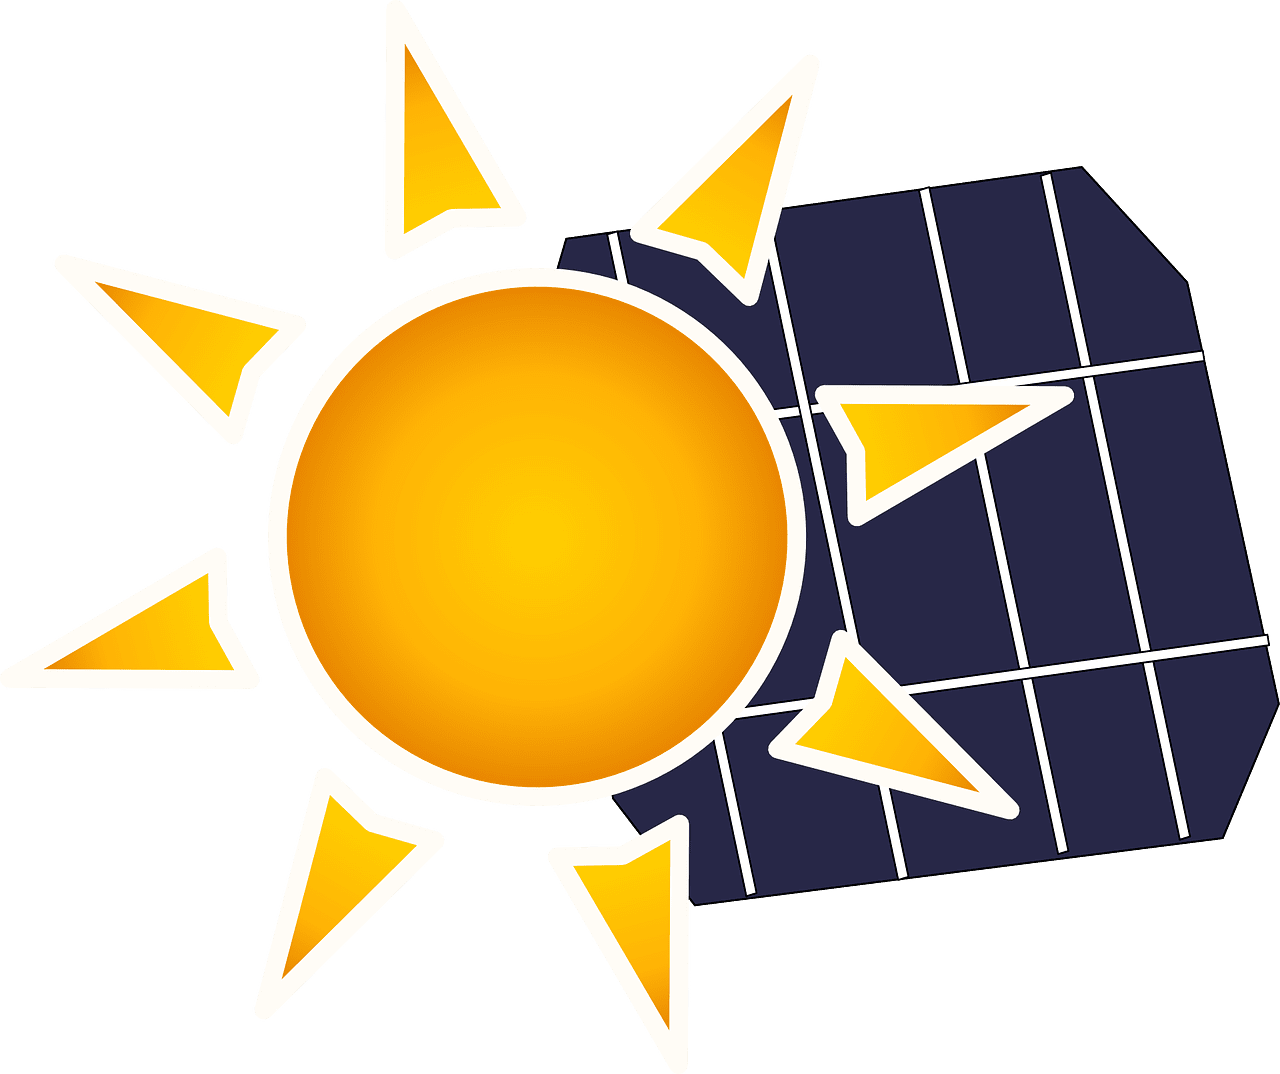 Solarladegerät für Handy